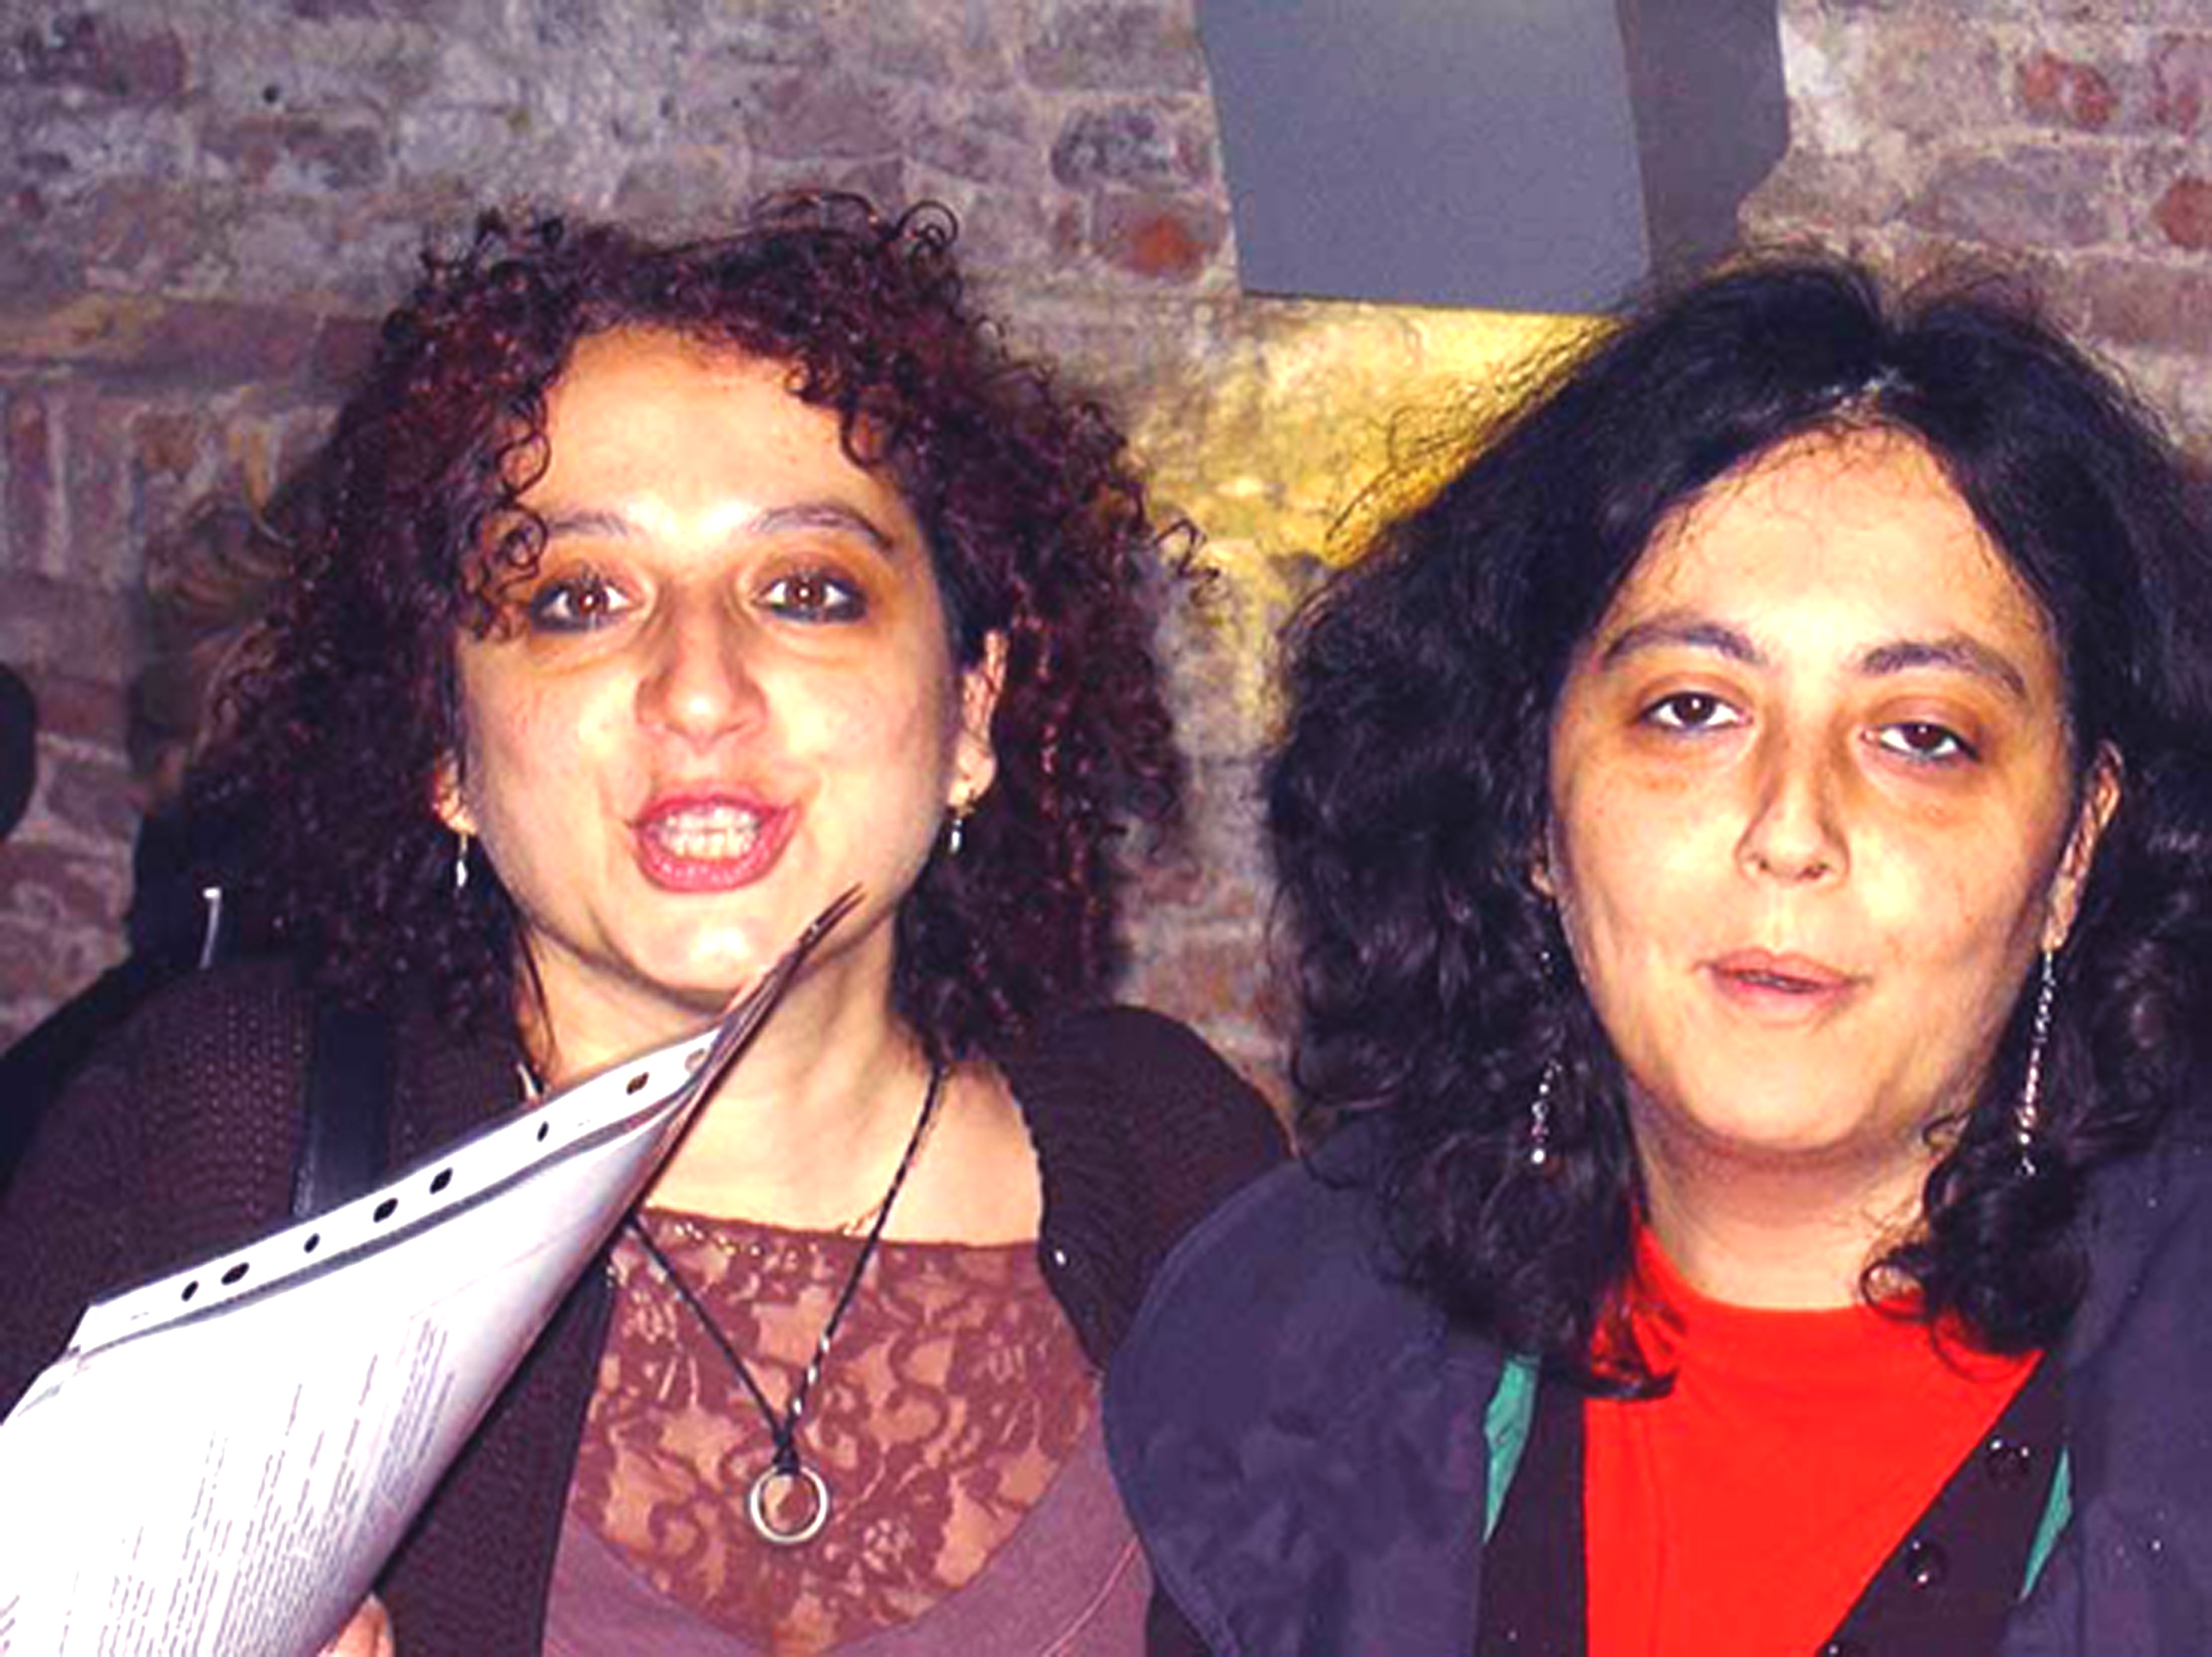 Con Sashinka Gorguinpour, Padova, 2008